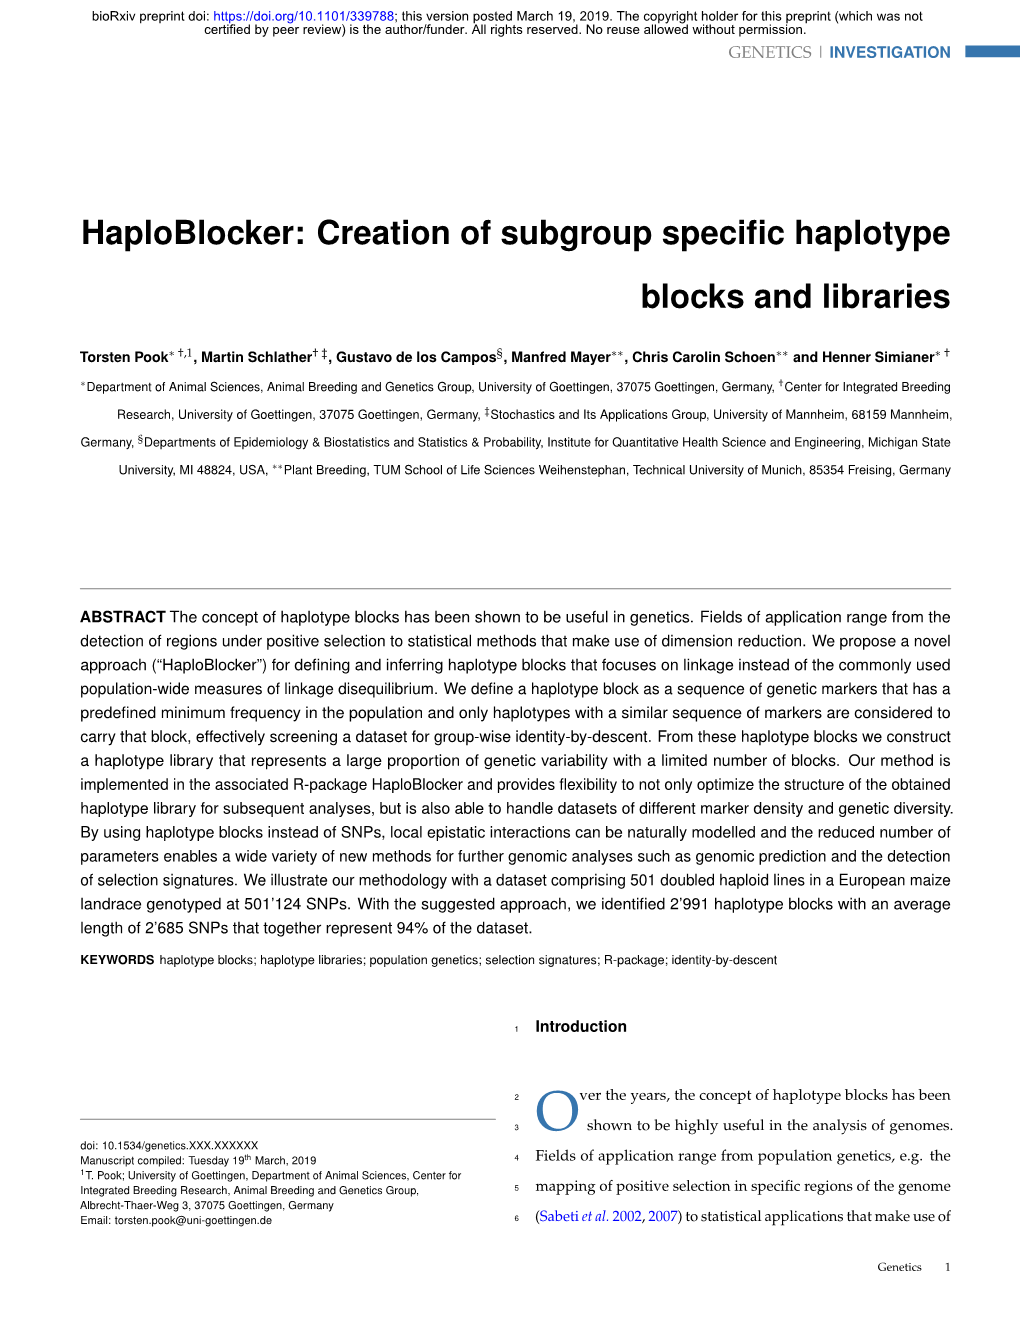 Haploblocker: Creation of Subgroup Specific Haplotype Blocks and Libraries